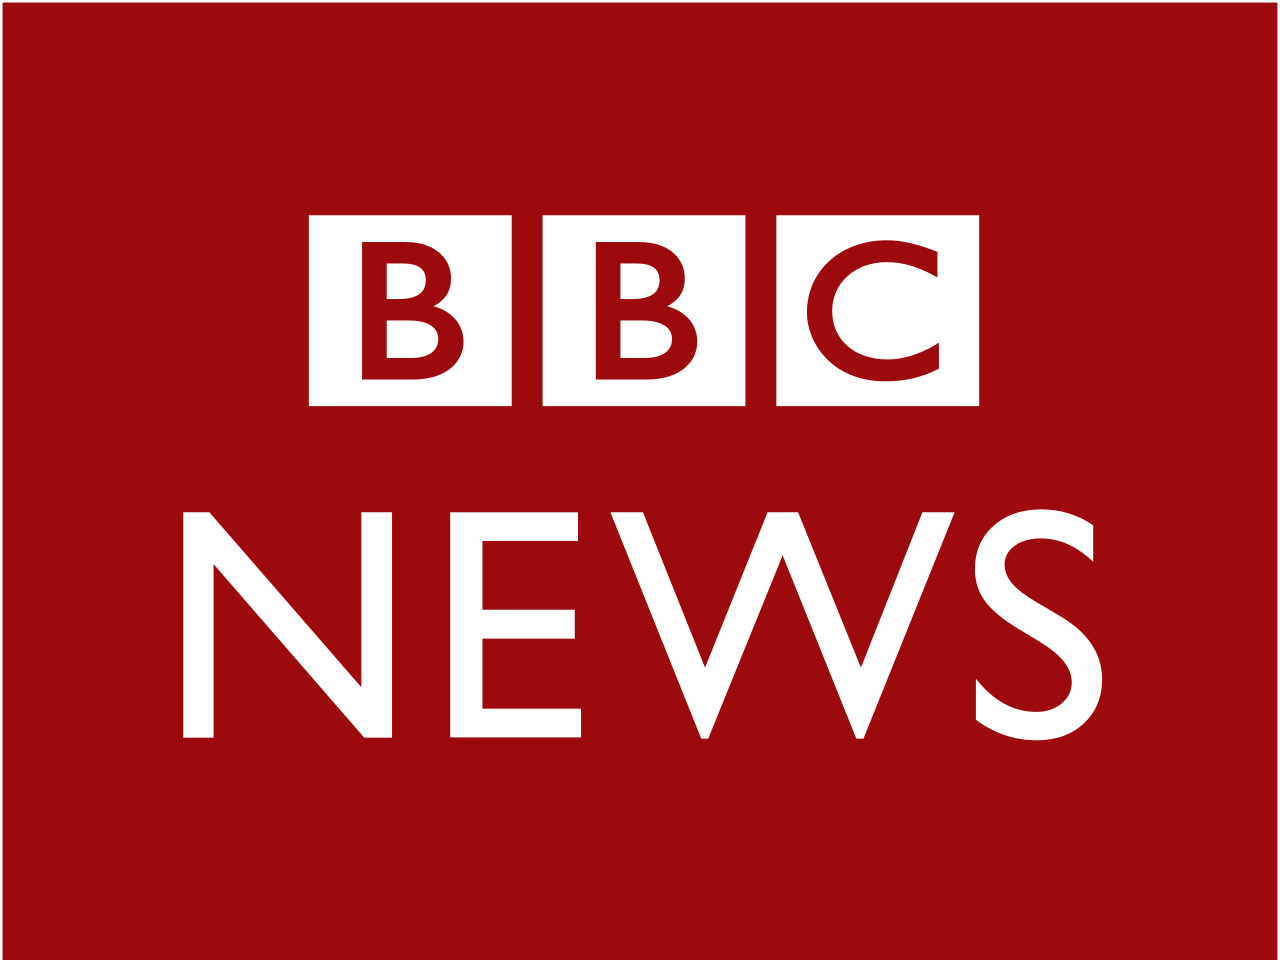 The British Broadcasting Corporation logo.